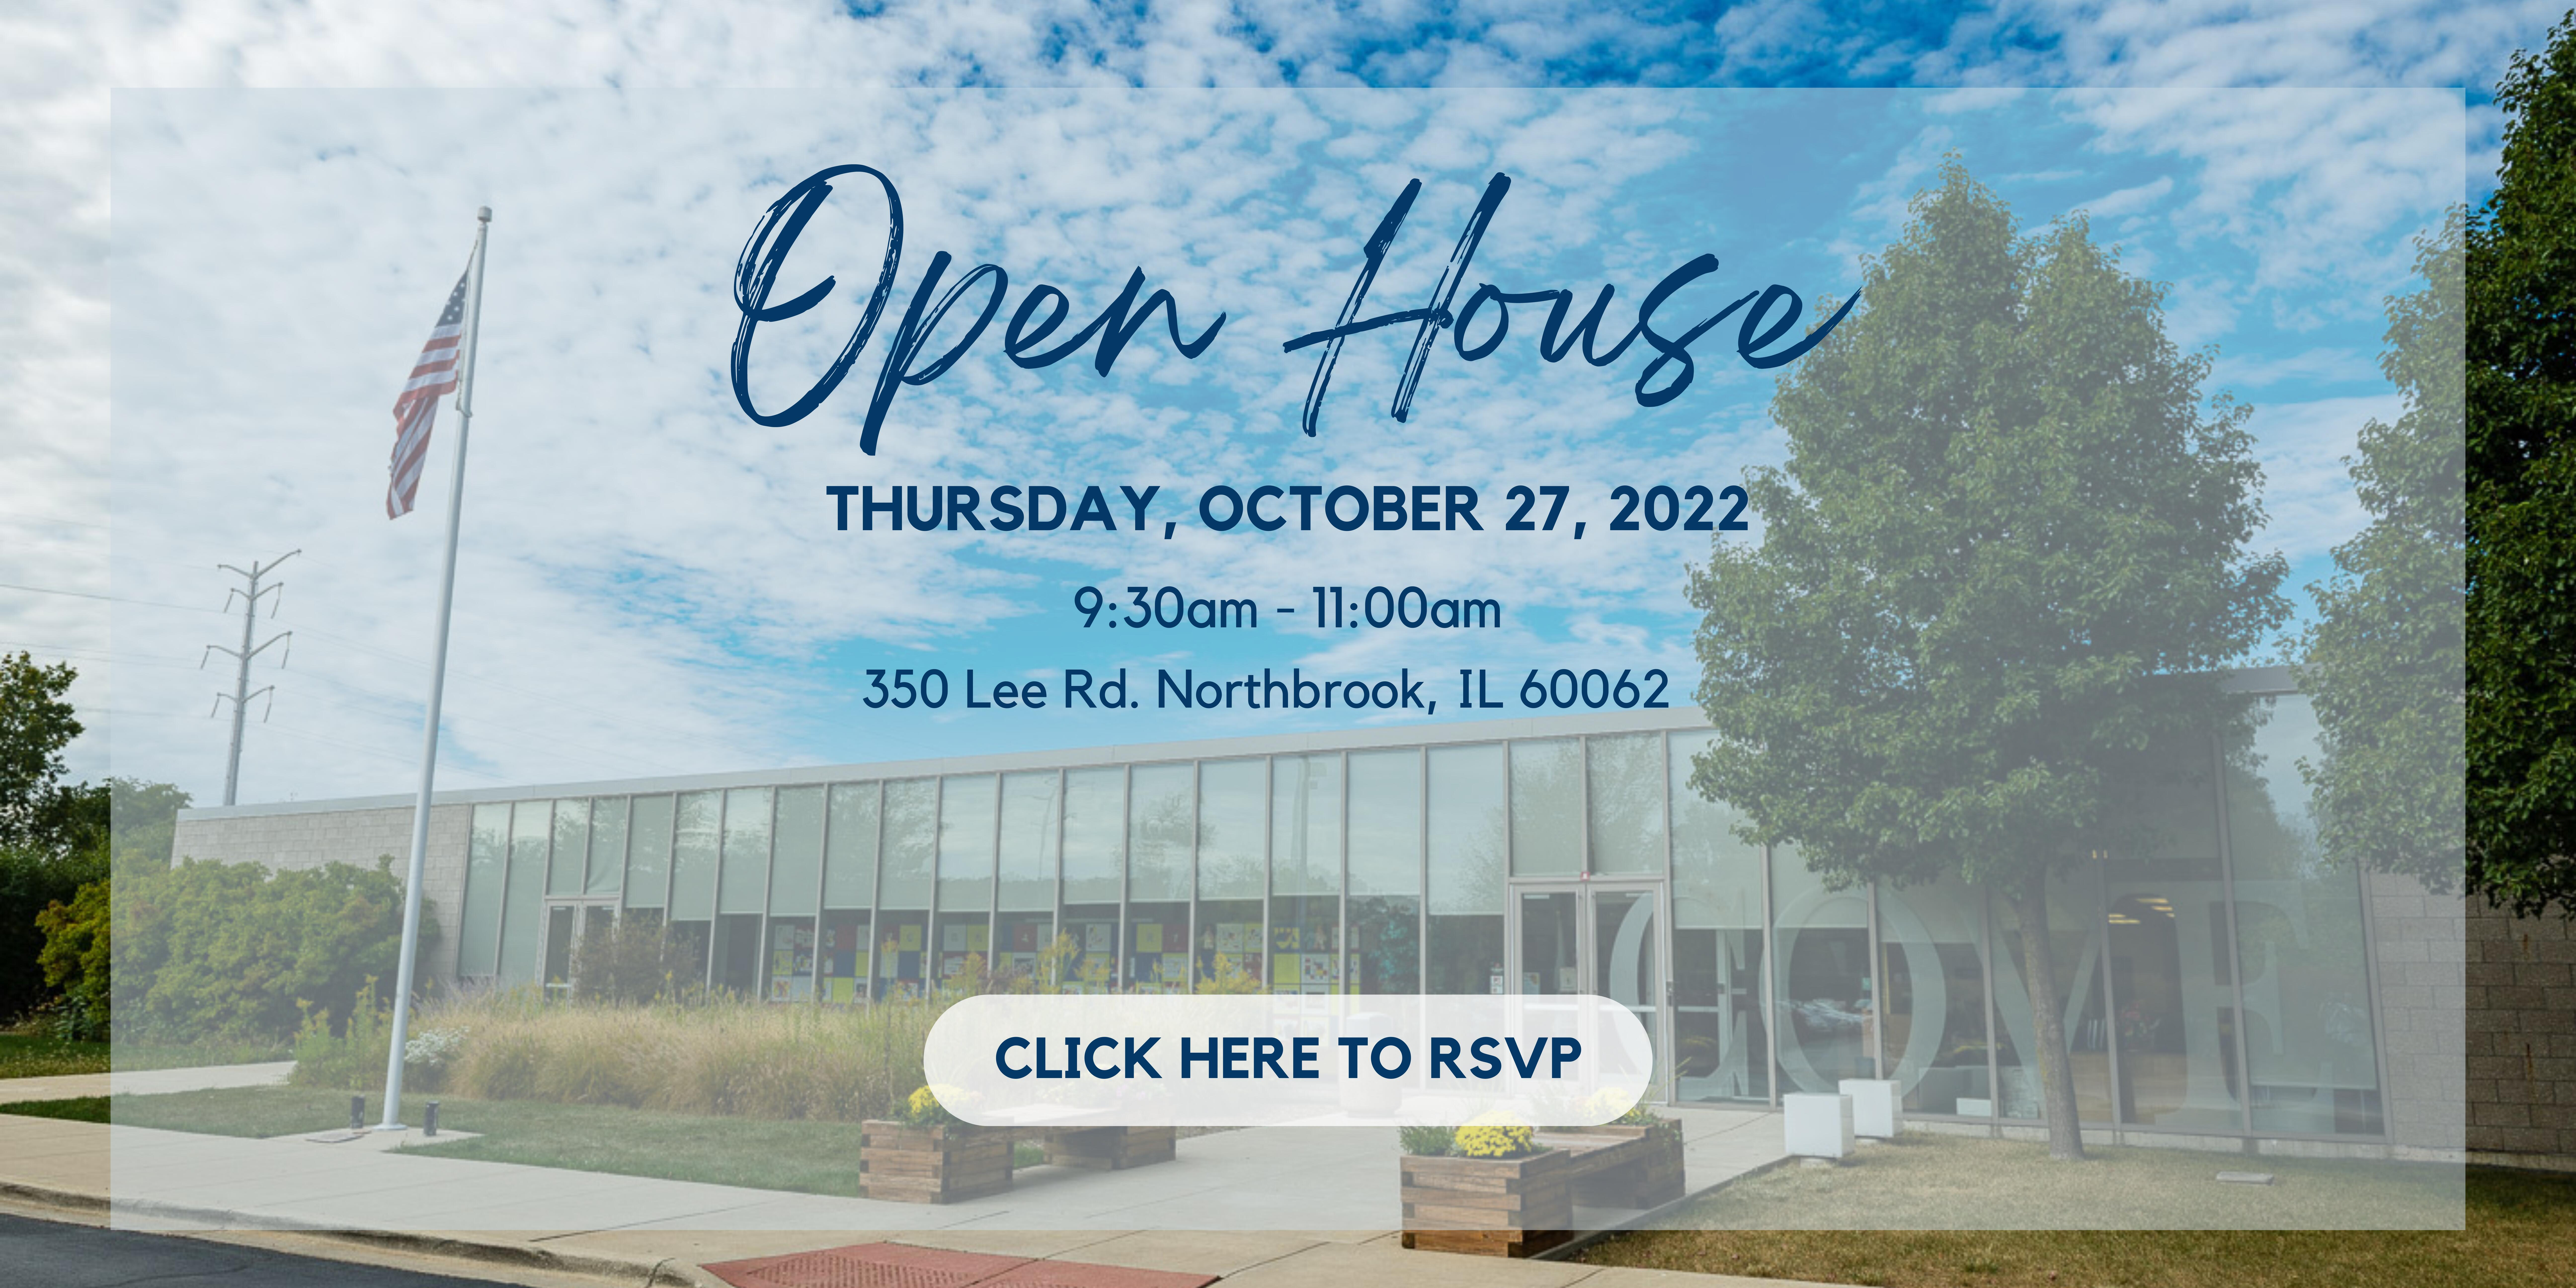 Open House - Thursday, October 27, 2022